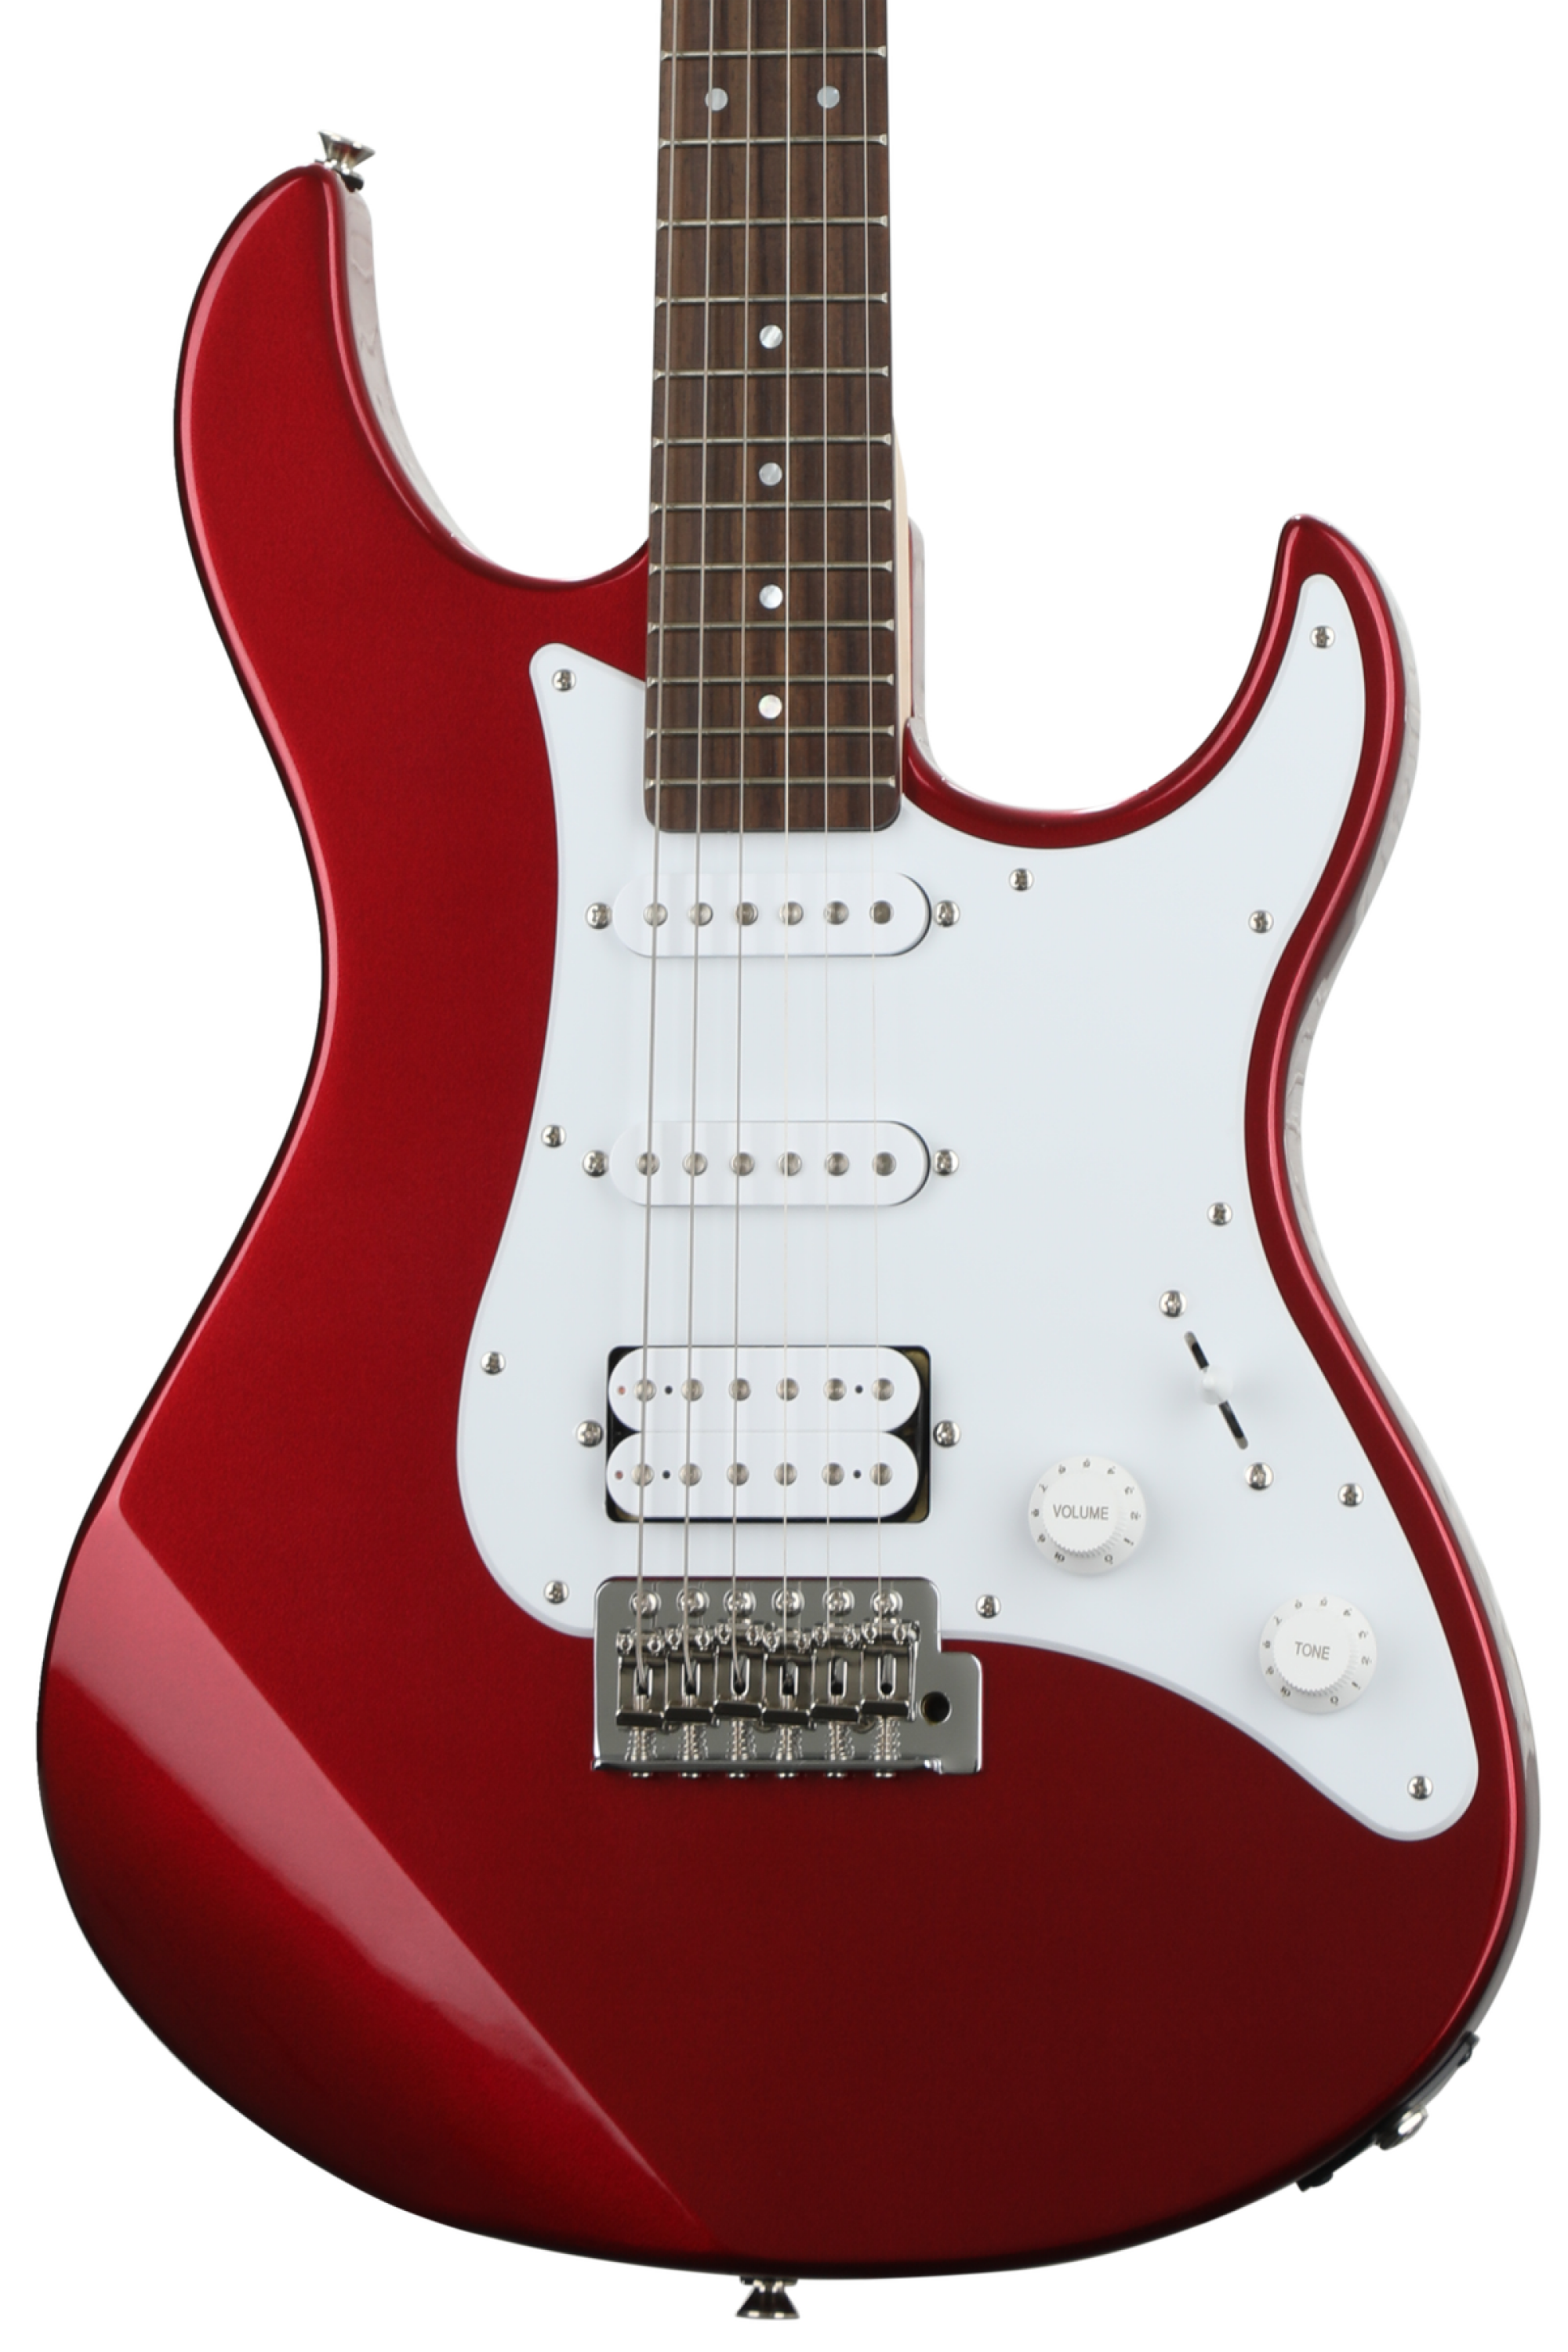 Yamaha PAC012 Pacifica Electric Guitar - Metallic Red